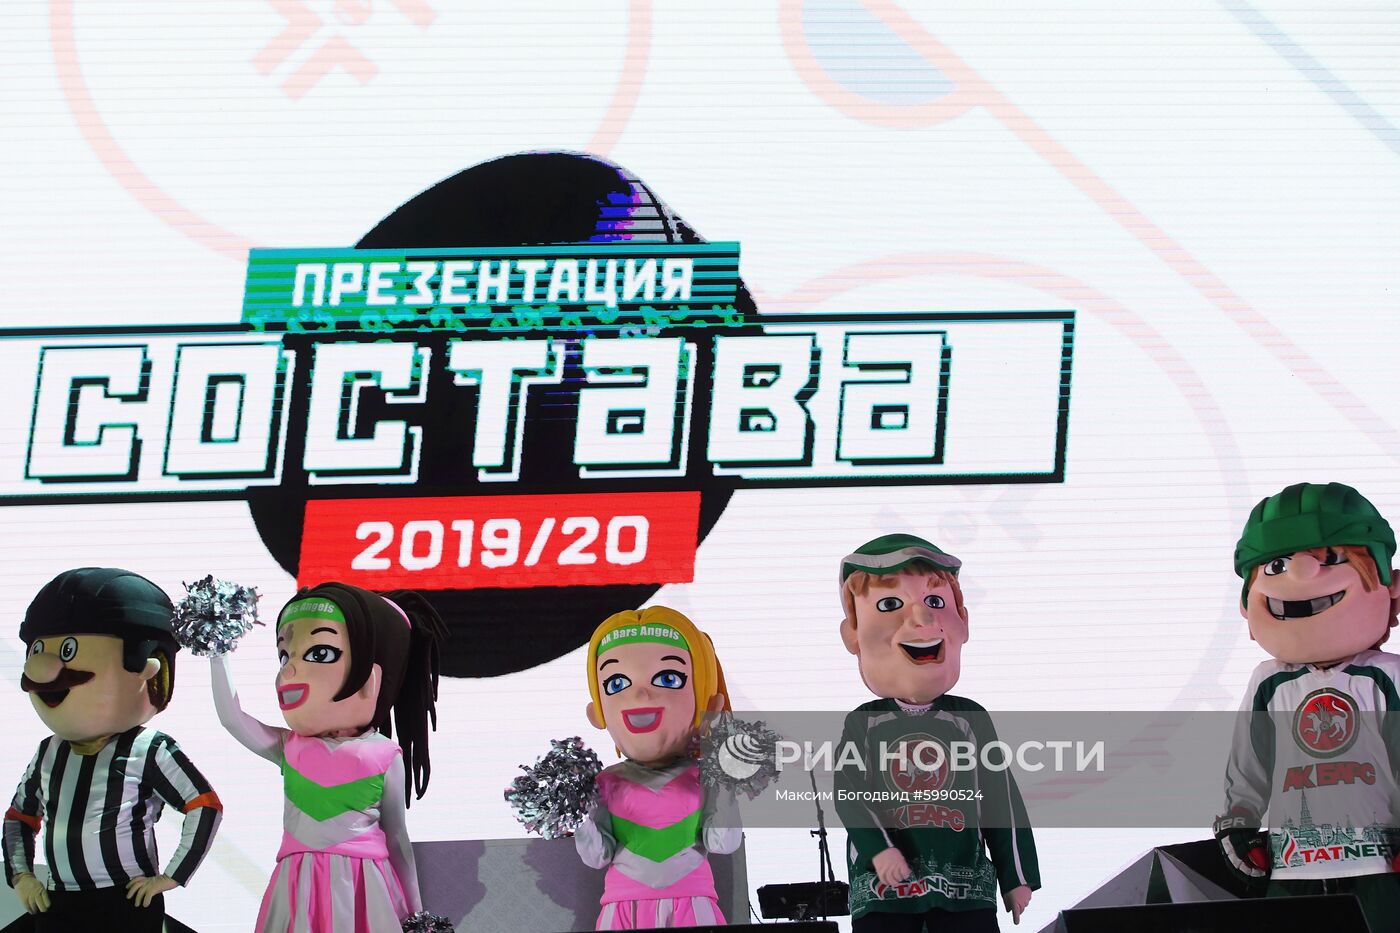 Презентация ХК "Ак Барс" сезона 2019/2020